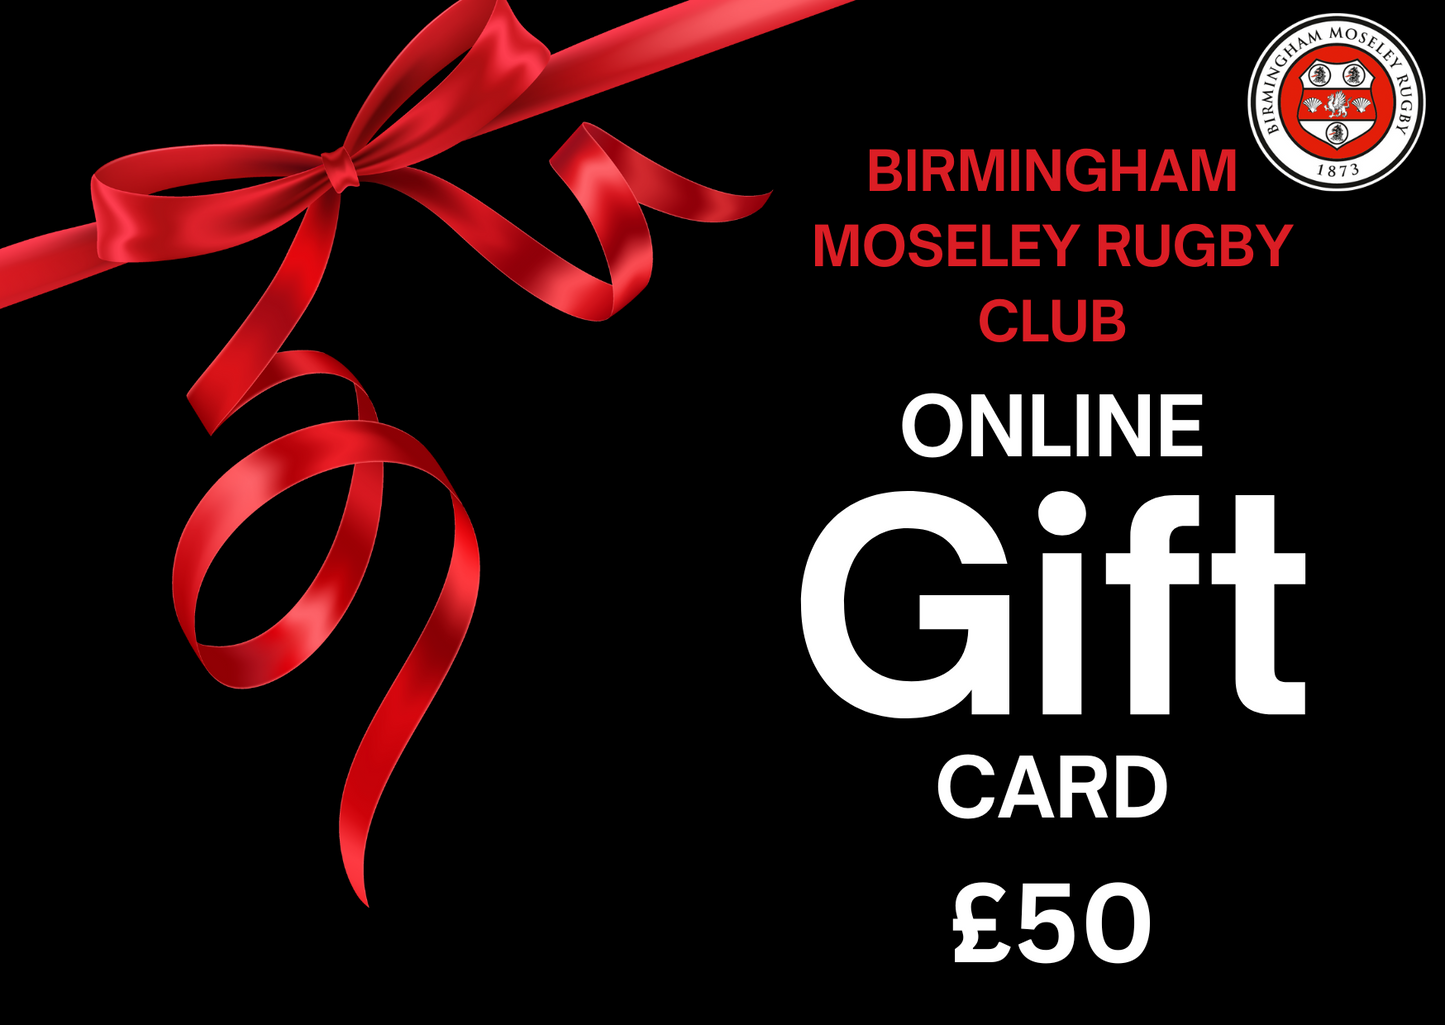 Birmingham Moseley Online Gift Card